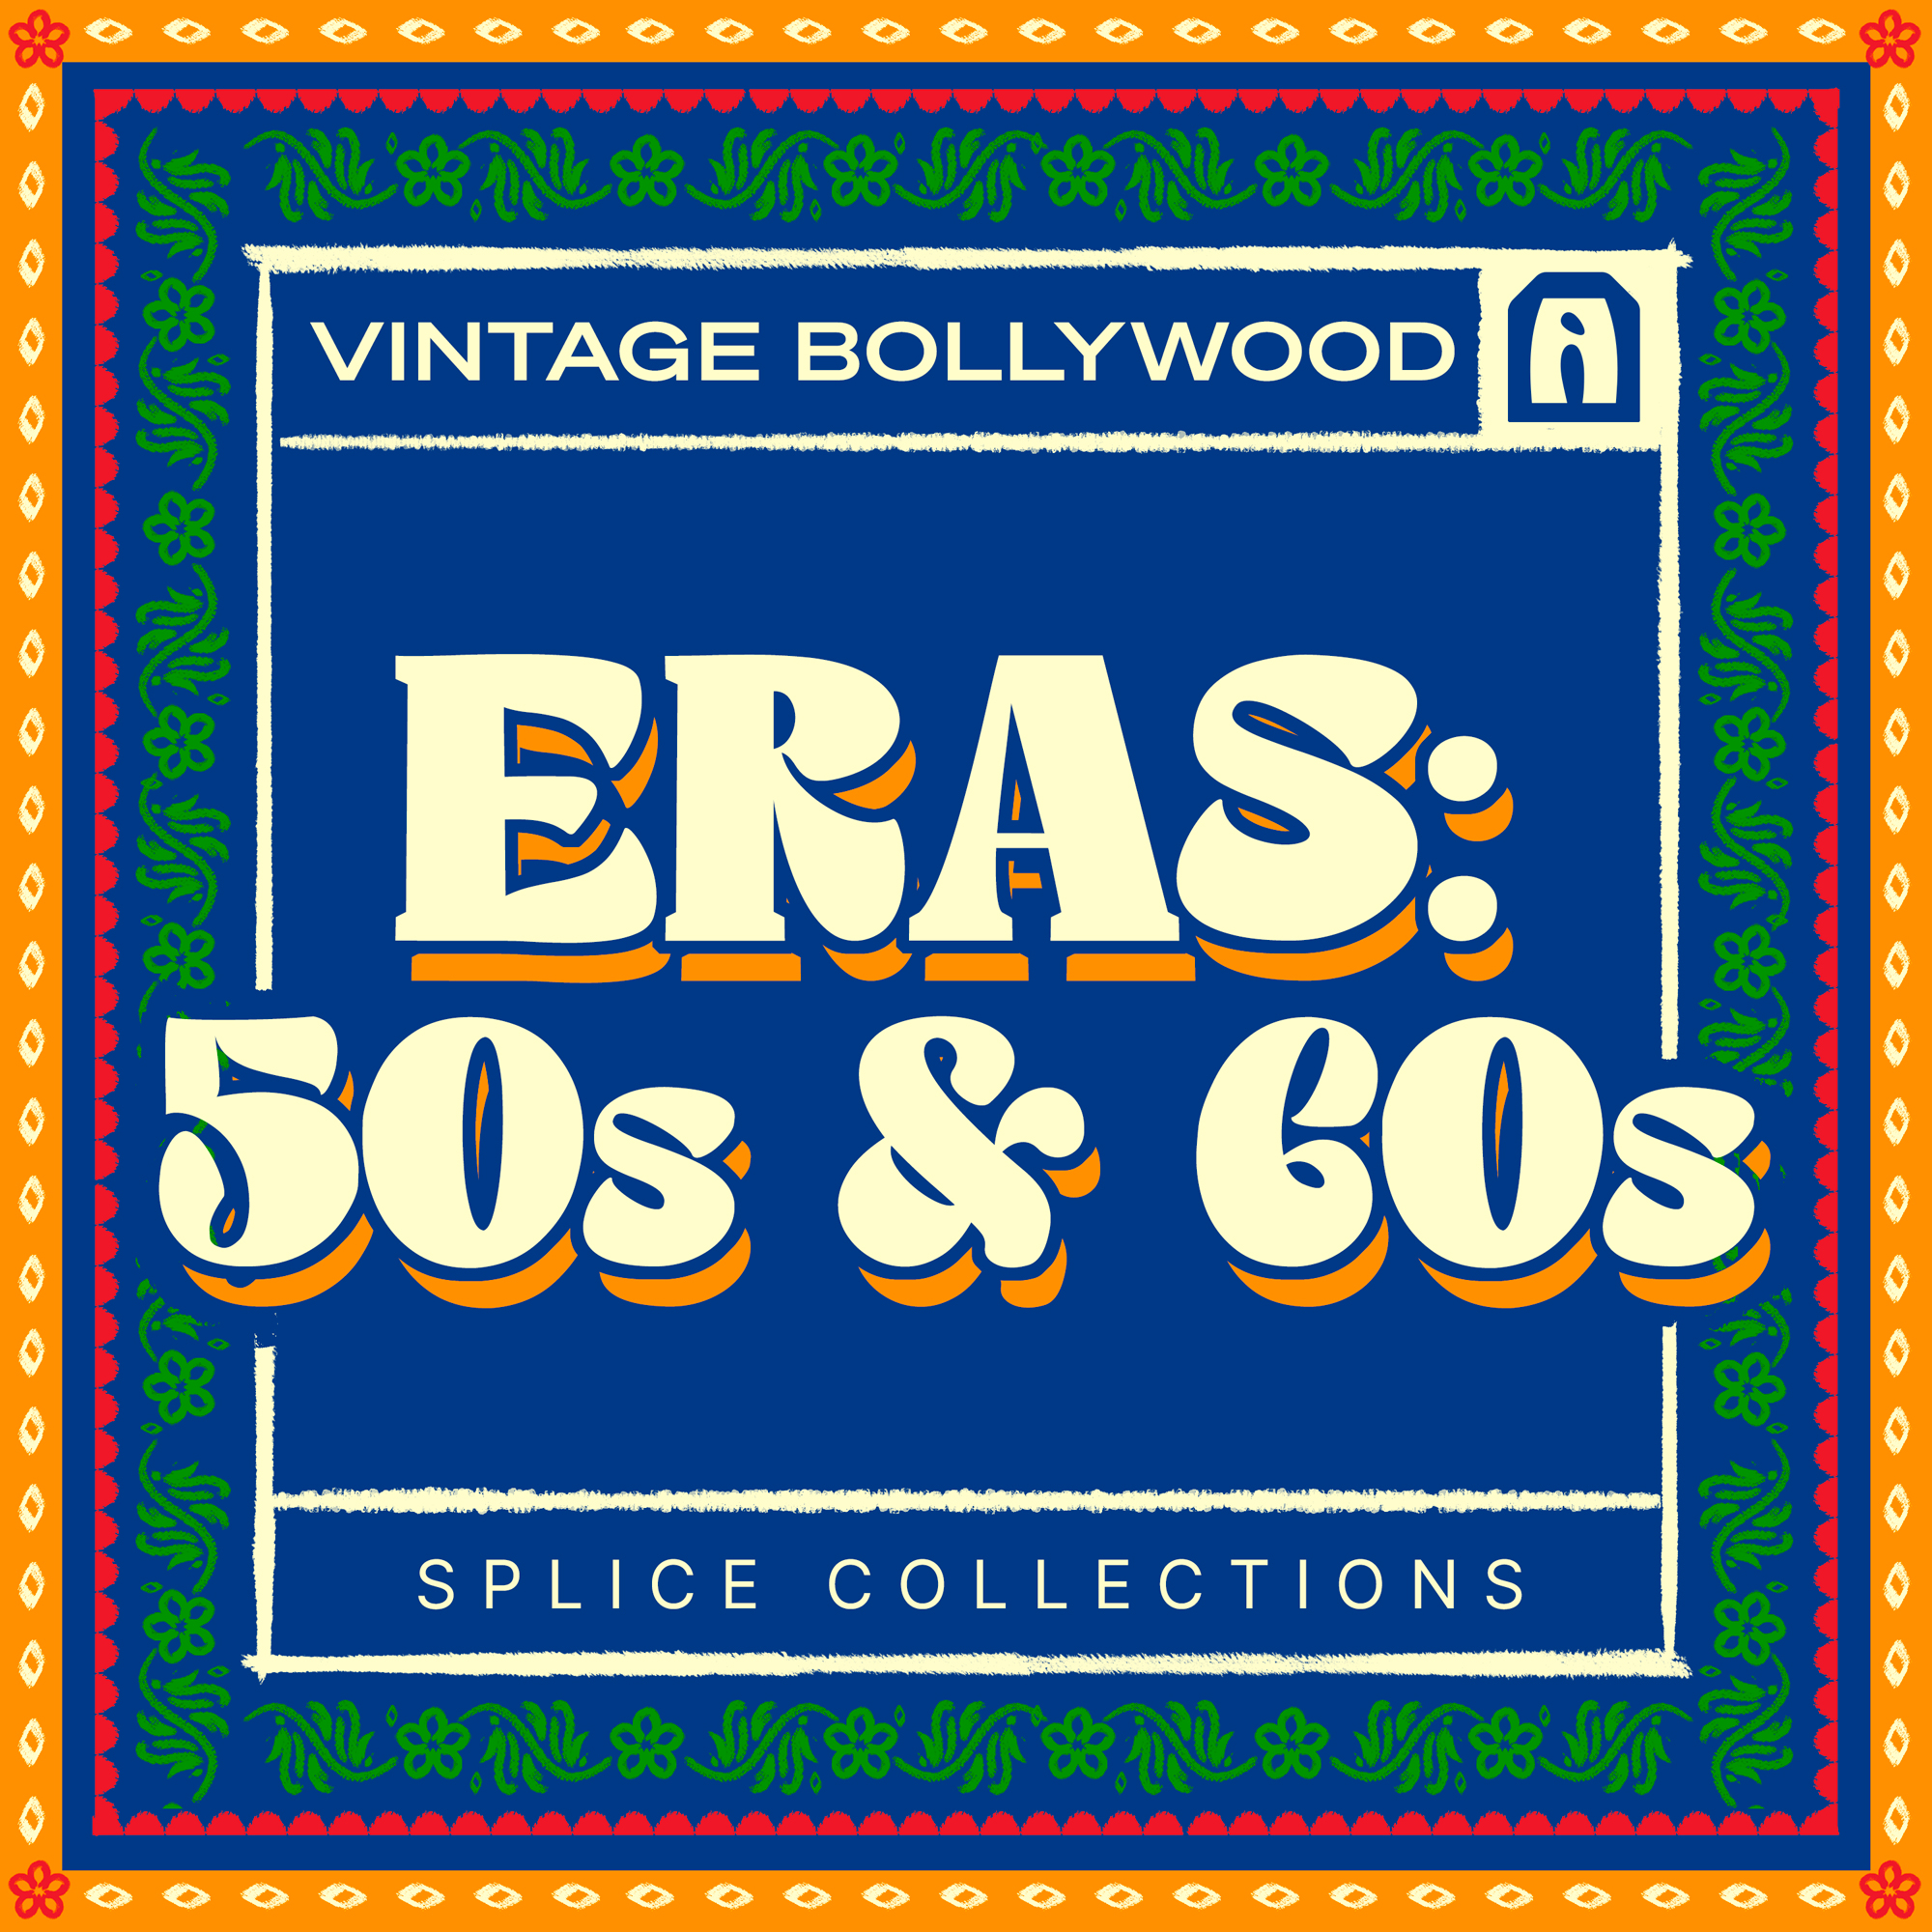 Vintage Bollywood (Eras): 50s & 60s